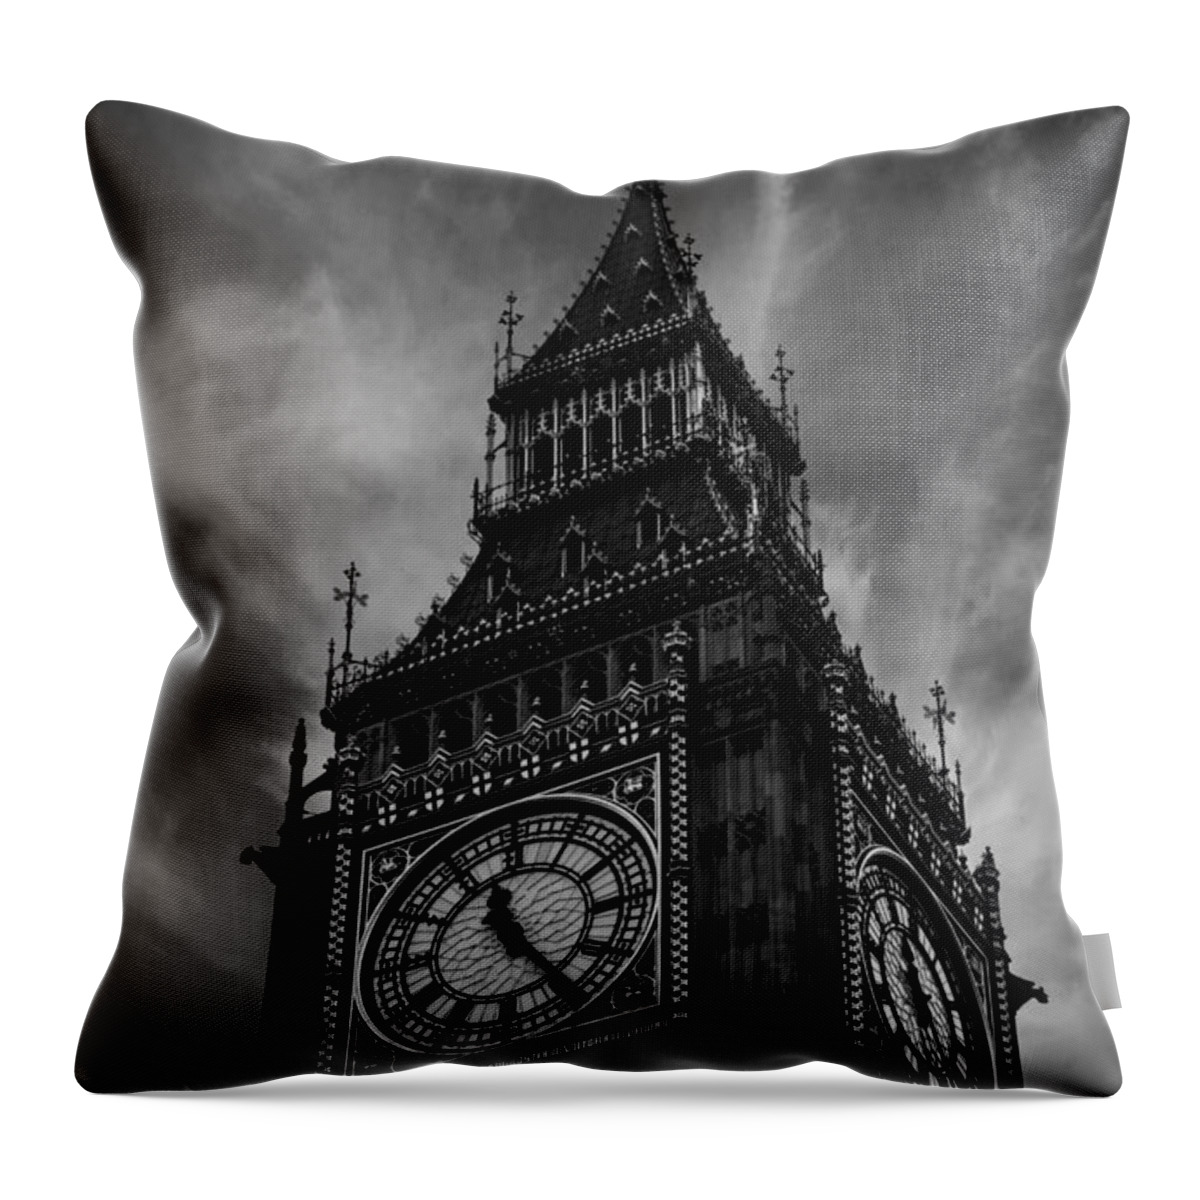 Bigben Throw Pillow featuring the photograph Big Ben London by Martin Newman